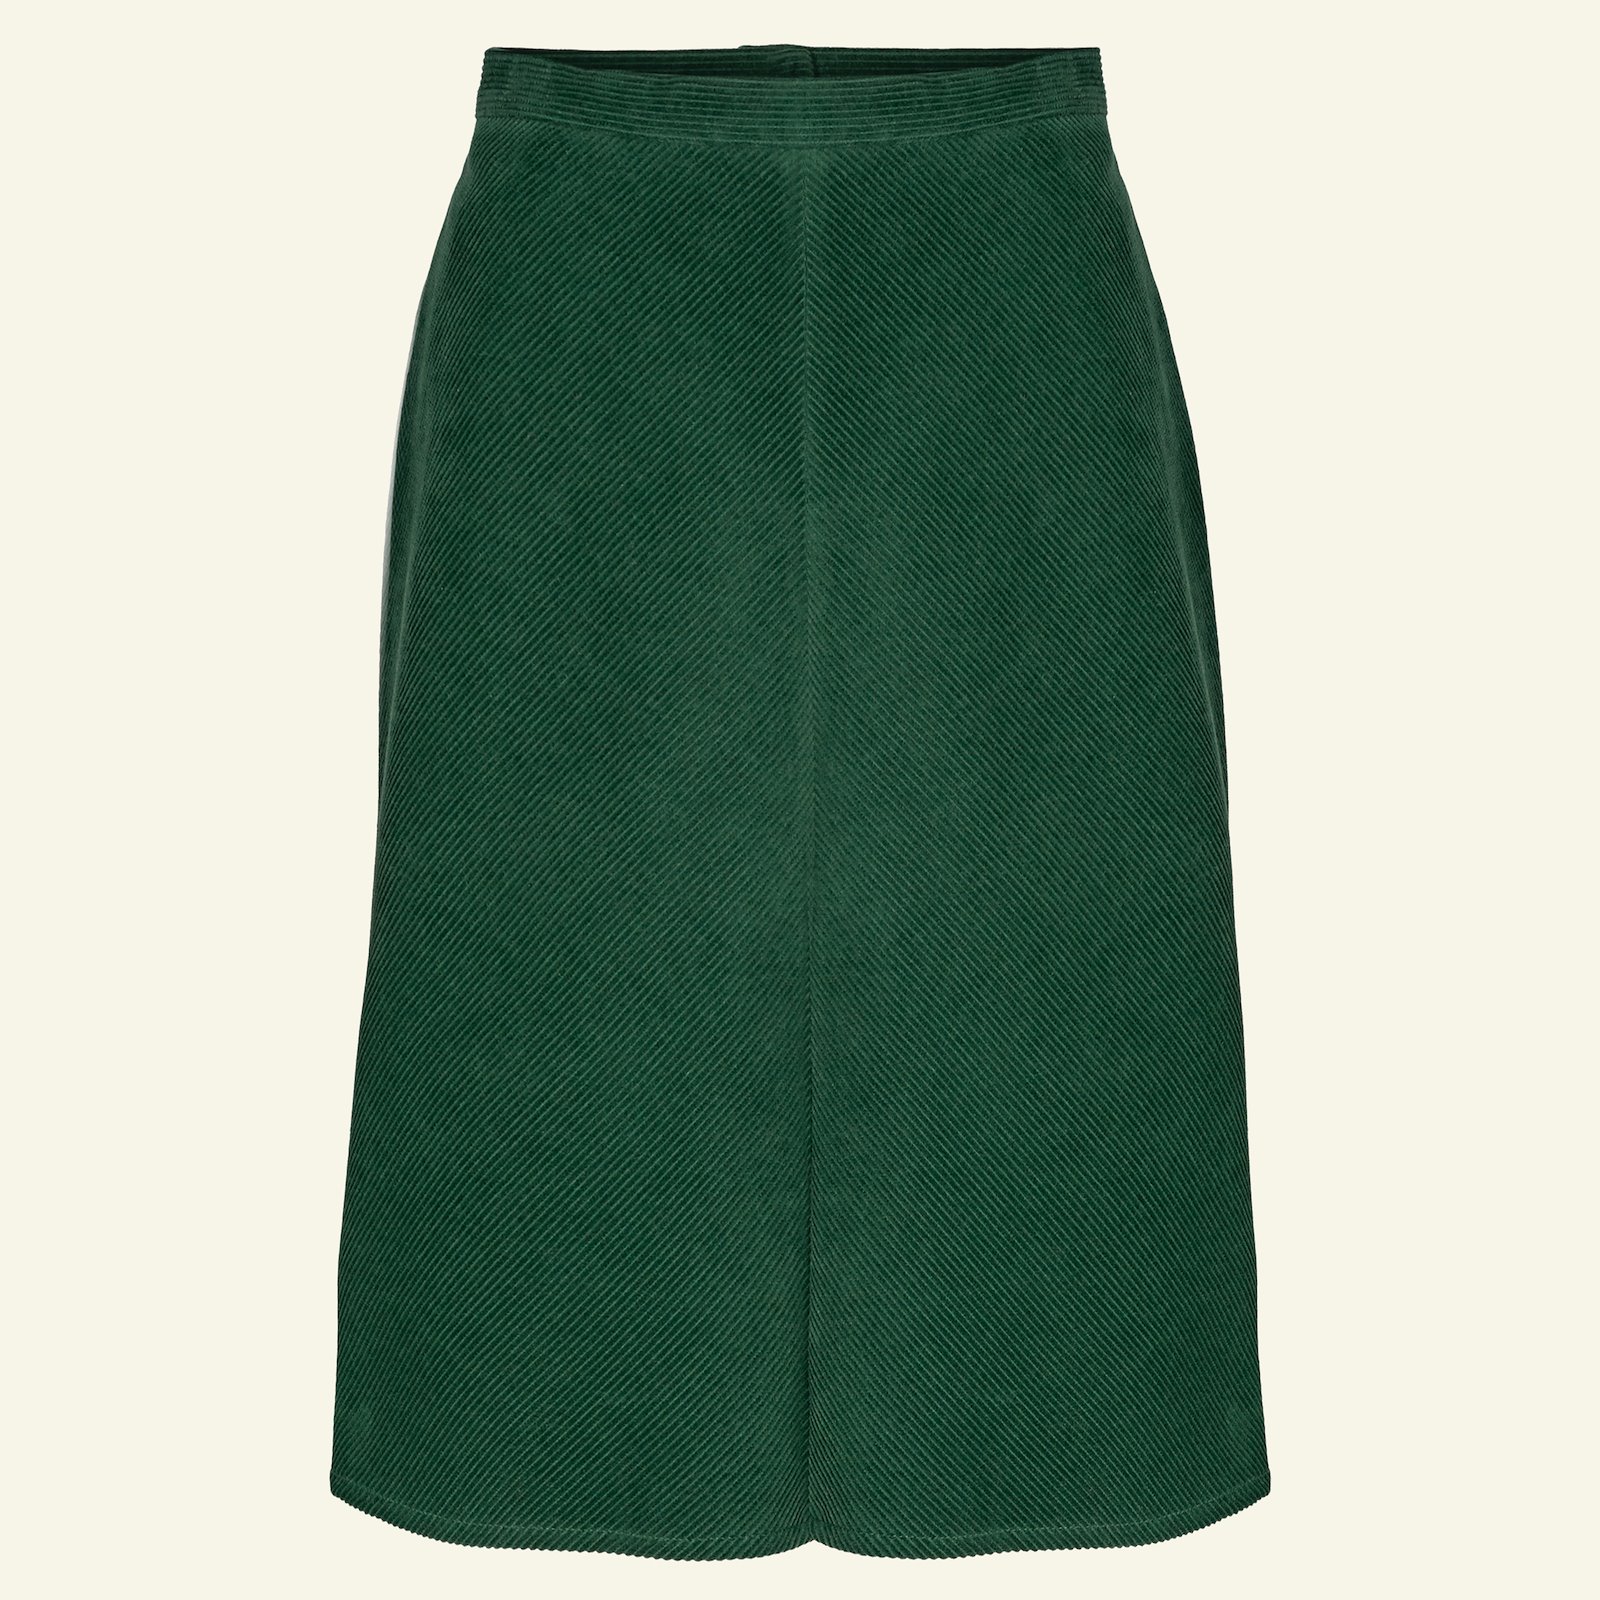 Skirt with A-shape, 36/8 p21038_430819_sskit